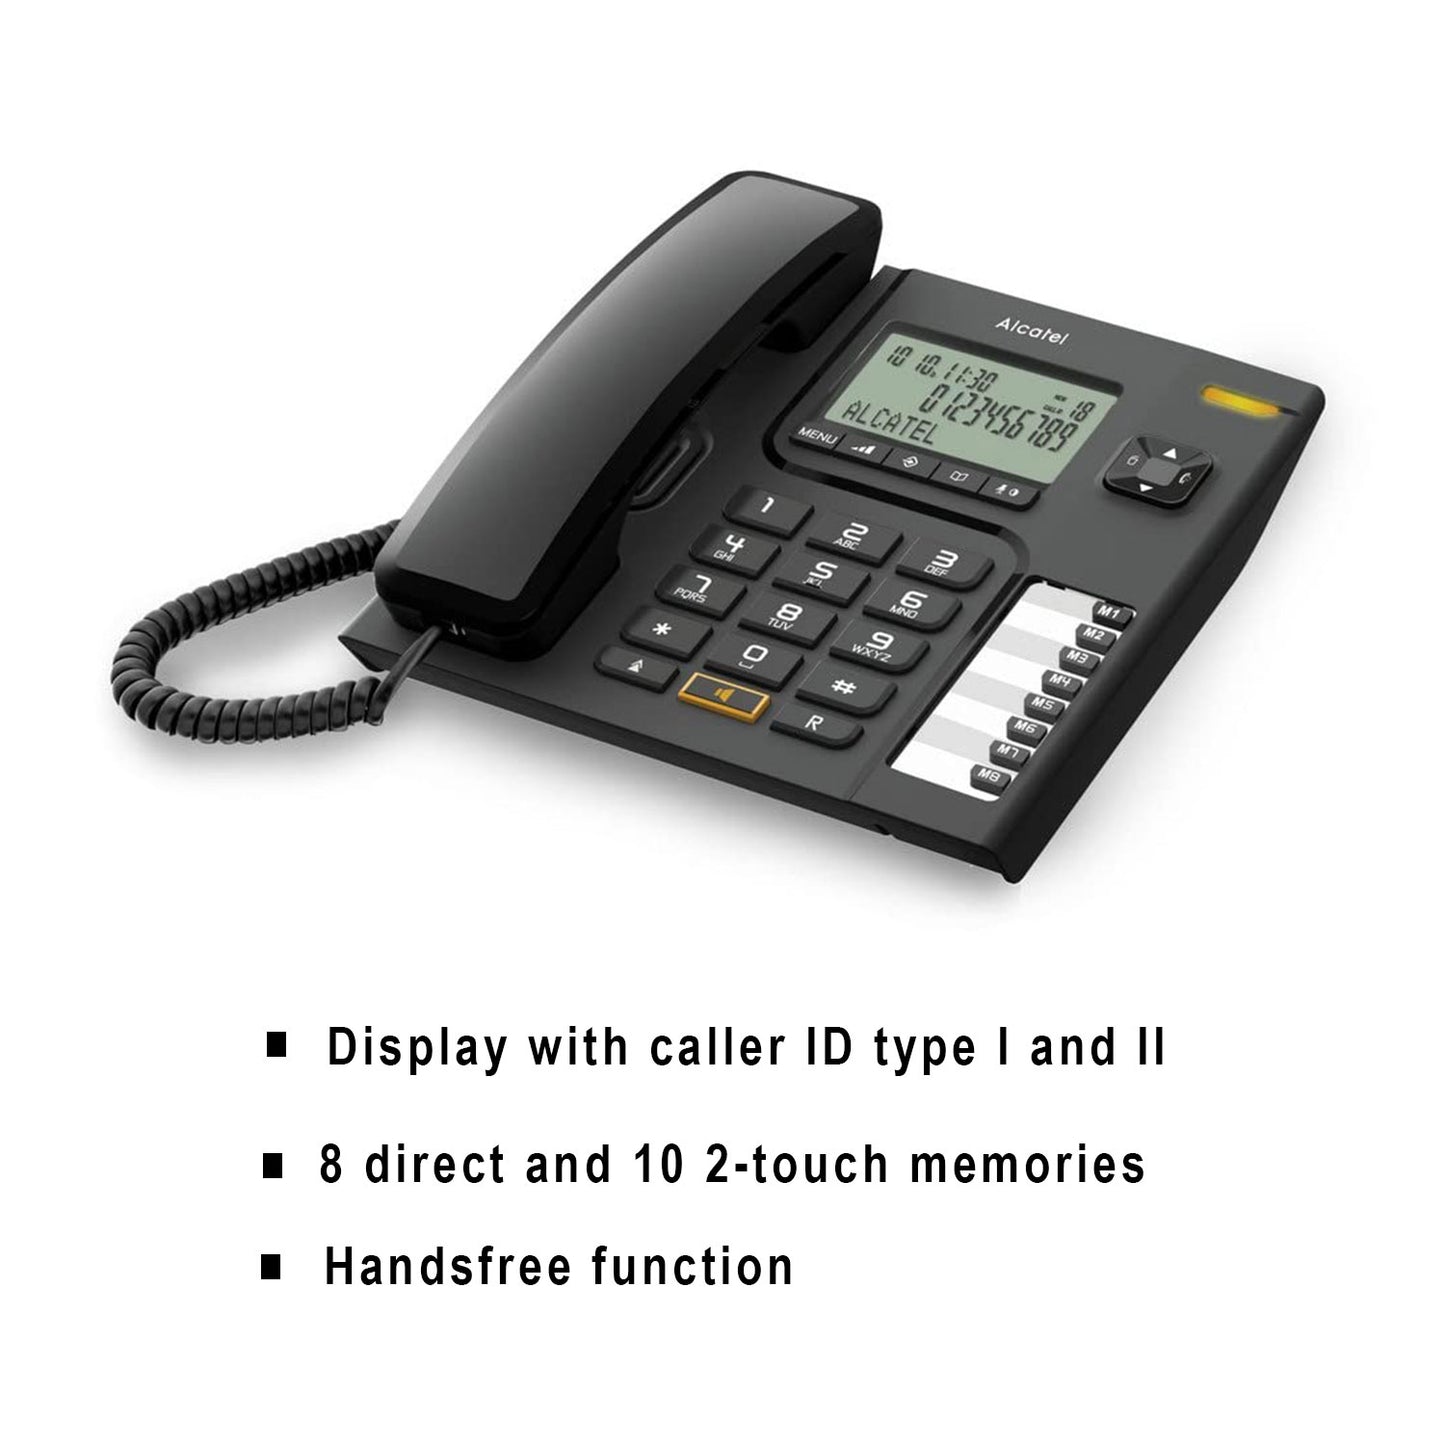 Alcatel T76 Corded Landline Phone with Caller ID and Speakerphone Black (Pack Of 5)